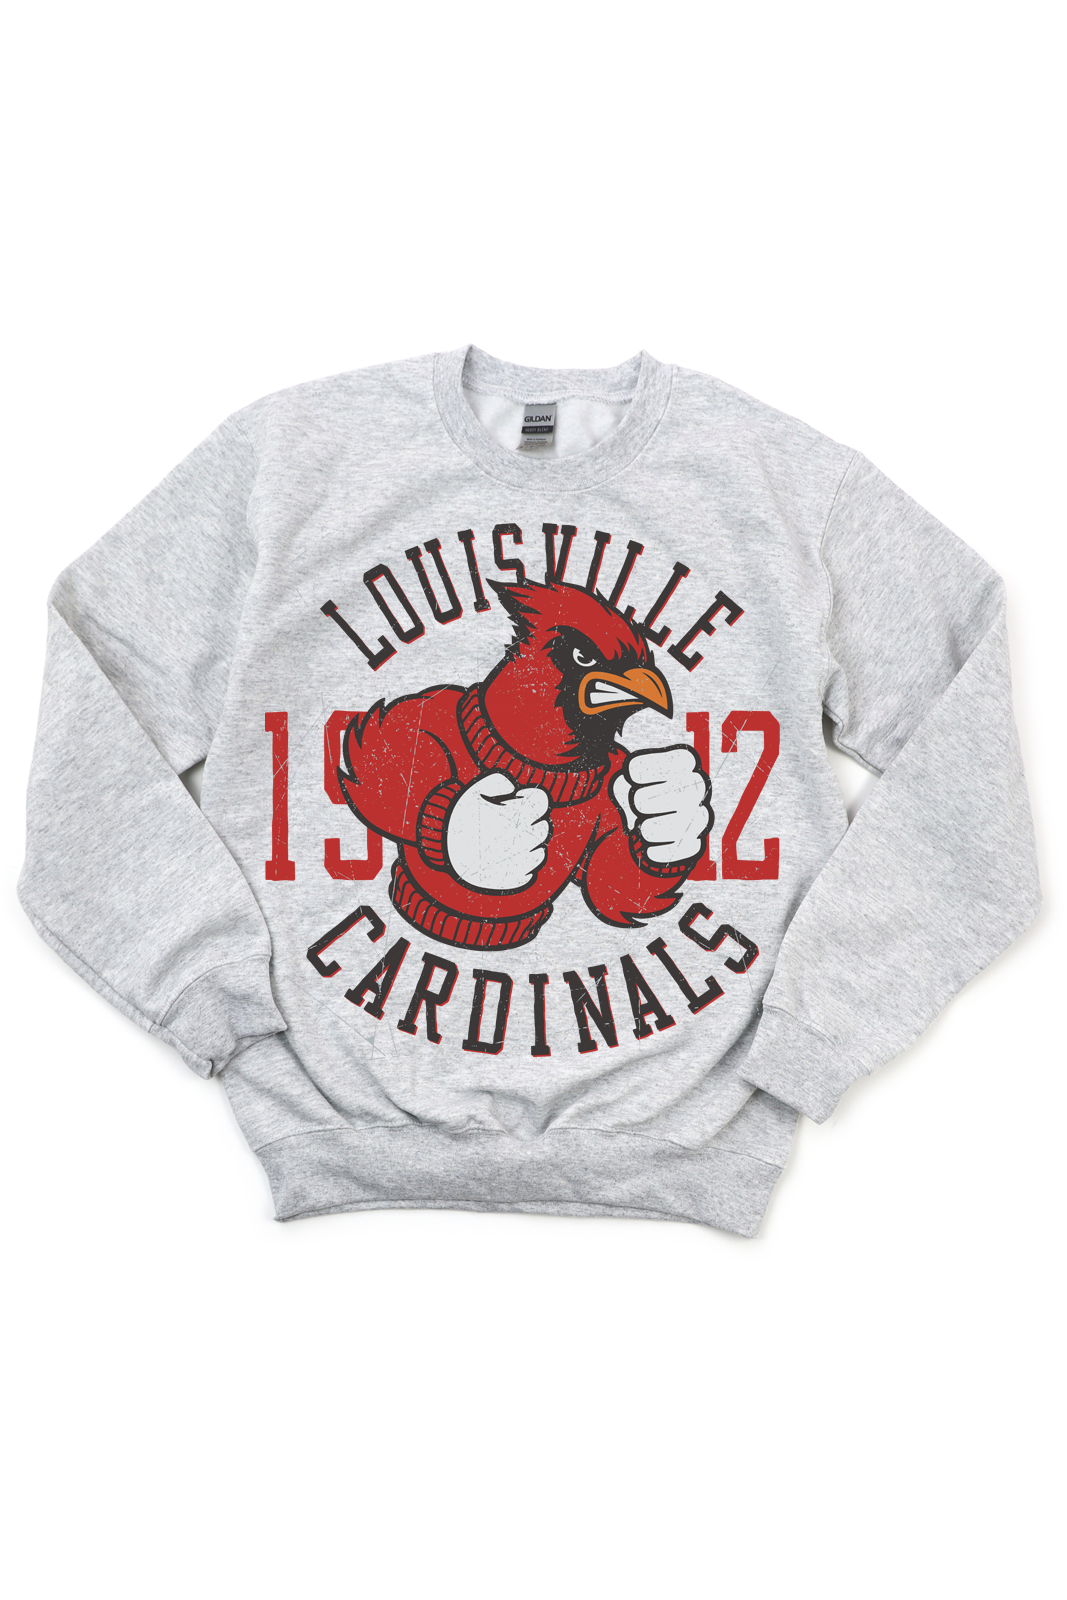 Cardinal Vintage Mascot Sweatshirt